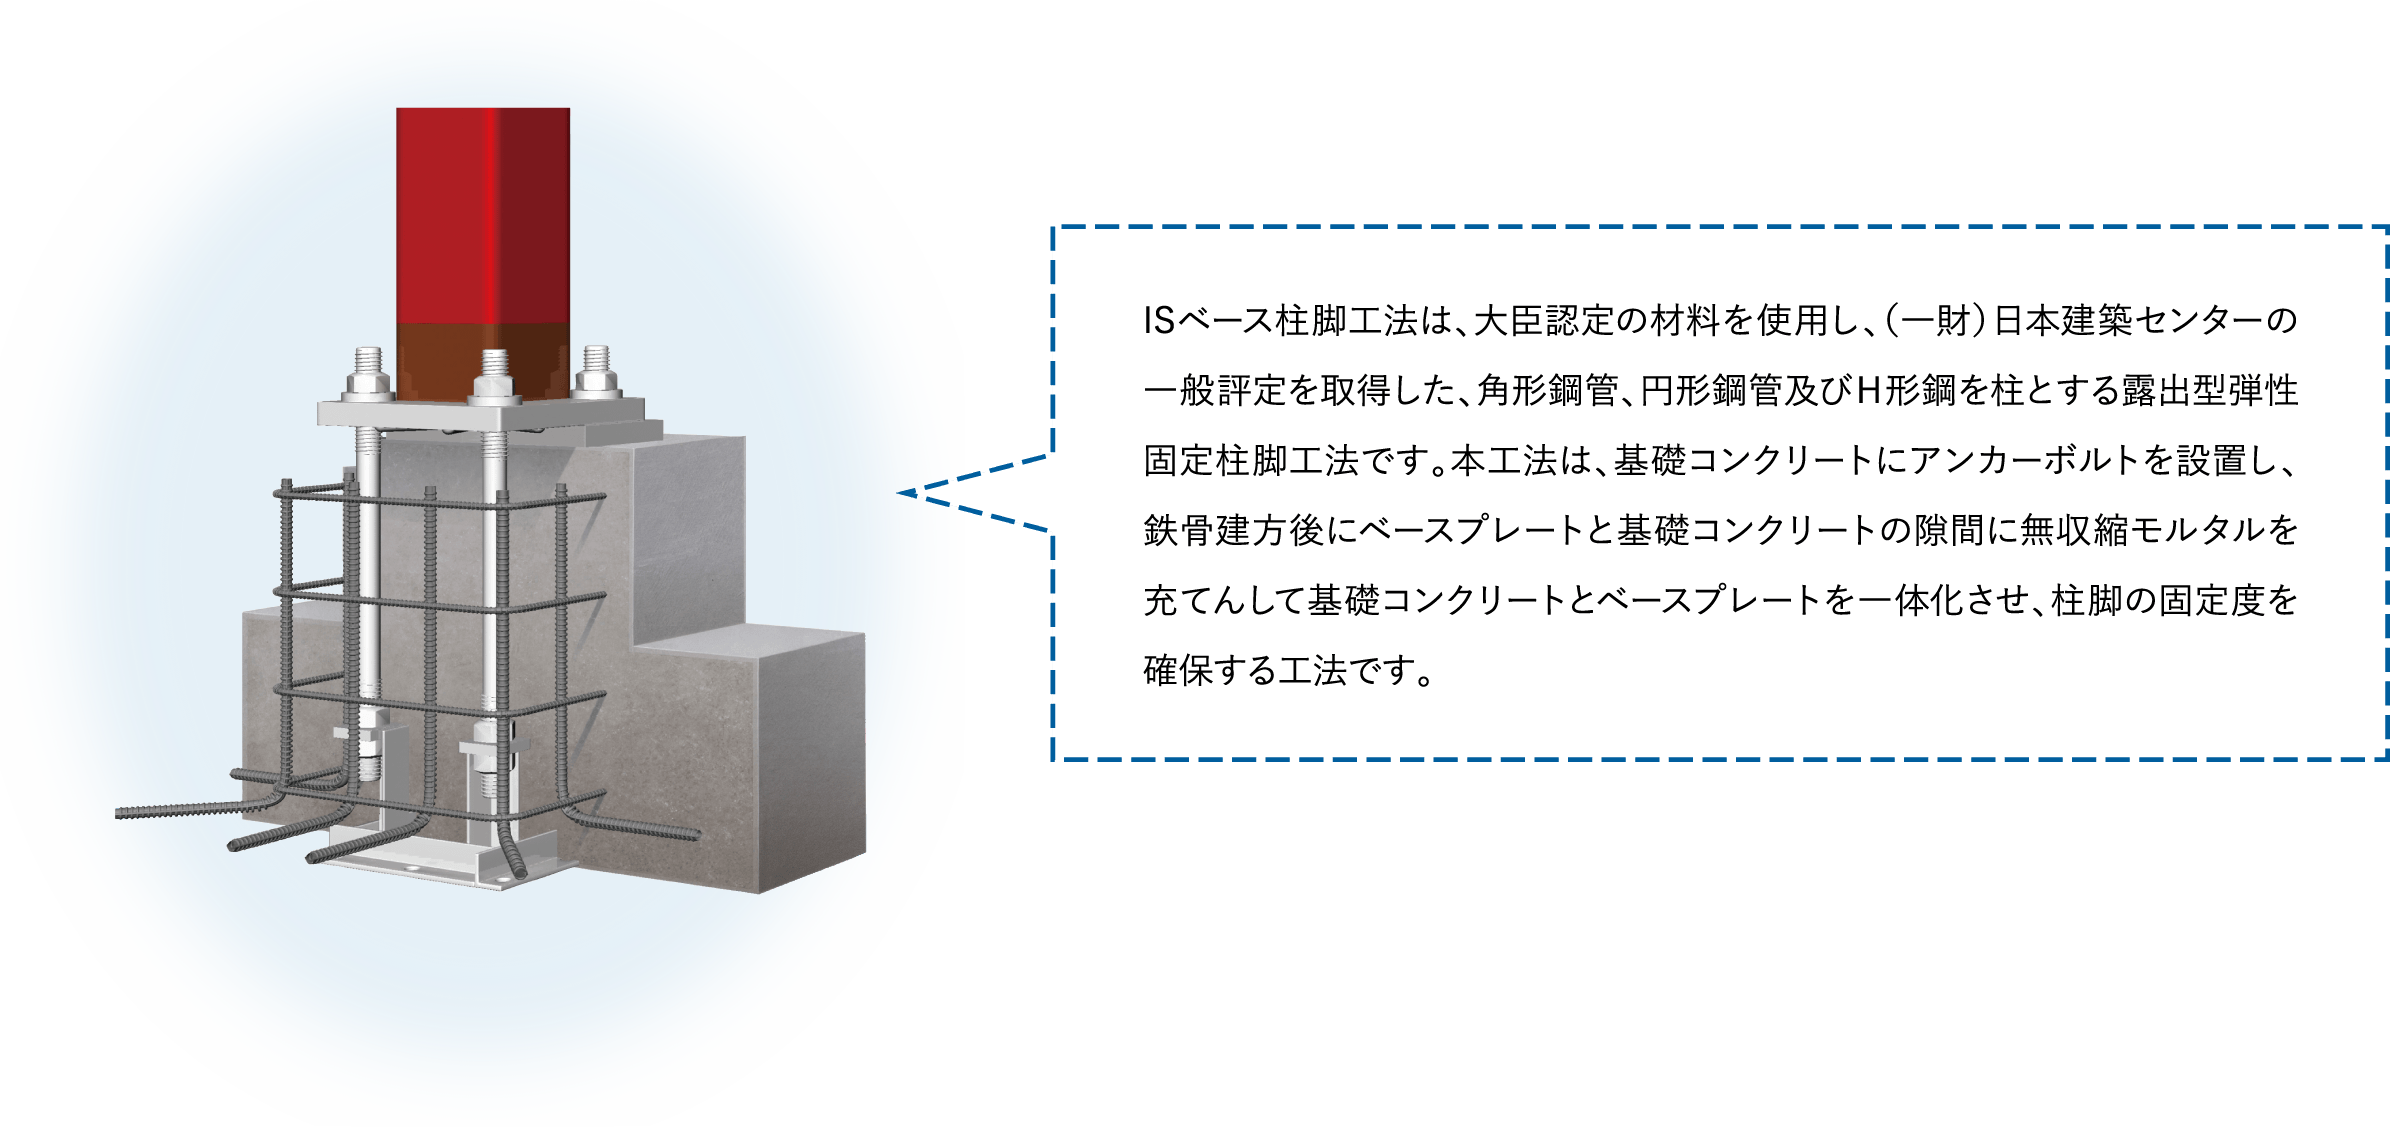 ISベース柱脚工法は、大臣認定の材料を使用し、（一財）日本建築センターの一般評定を取得した、角形鋼管、円形鋼管及びＨ形鋼を柱とする露出型弾性固定柱脚工法です。本工法は、基礎コンクリートにアンカーボルトを設置し、鉄骨建方後にベースプレートと基礎コンクリートの隙間に無収縮モルタルを充てんして基礎コンクリートとベースプレートを一体化させ、柱脚の固定度を確保する工法です。